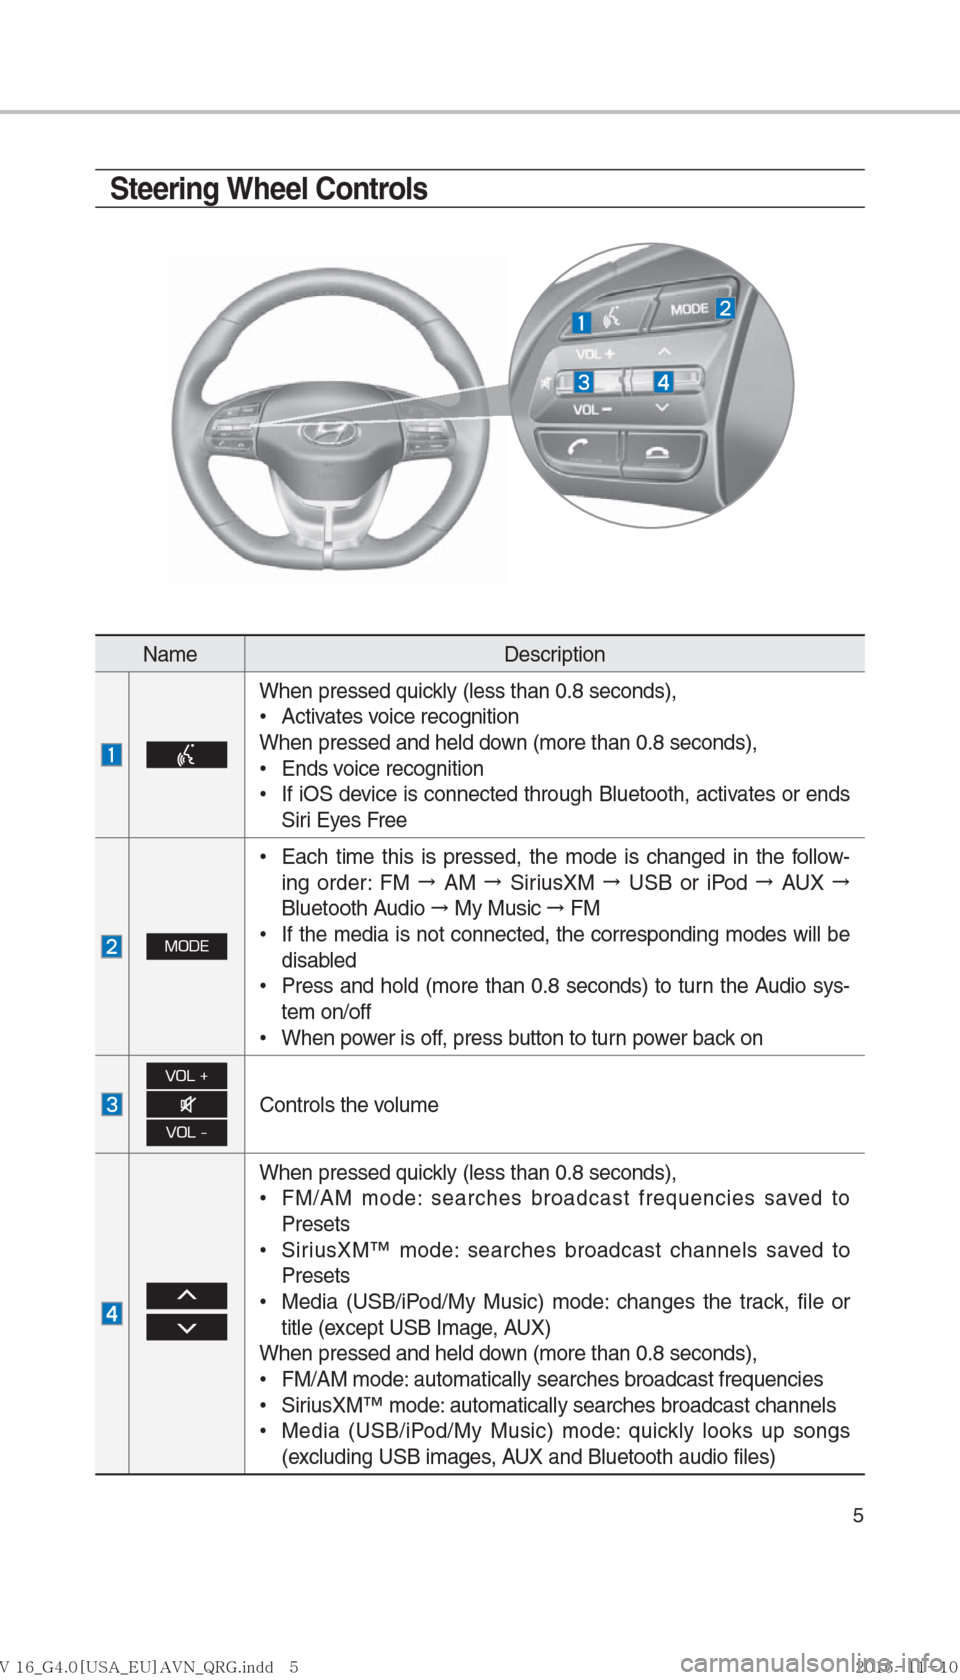 Hyundai Ioniq Hybrid 2017  Multimedia Manual 5
Steering Wheel Controls
NameDescription
When pressed quickly (less than 0.8 seconds),
 
•
Activates voice recognition
When pressed and held down (more than 0.8 seconds),  
•
Ends voice recogniti